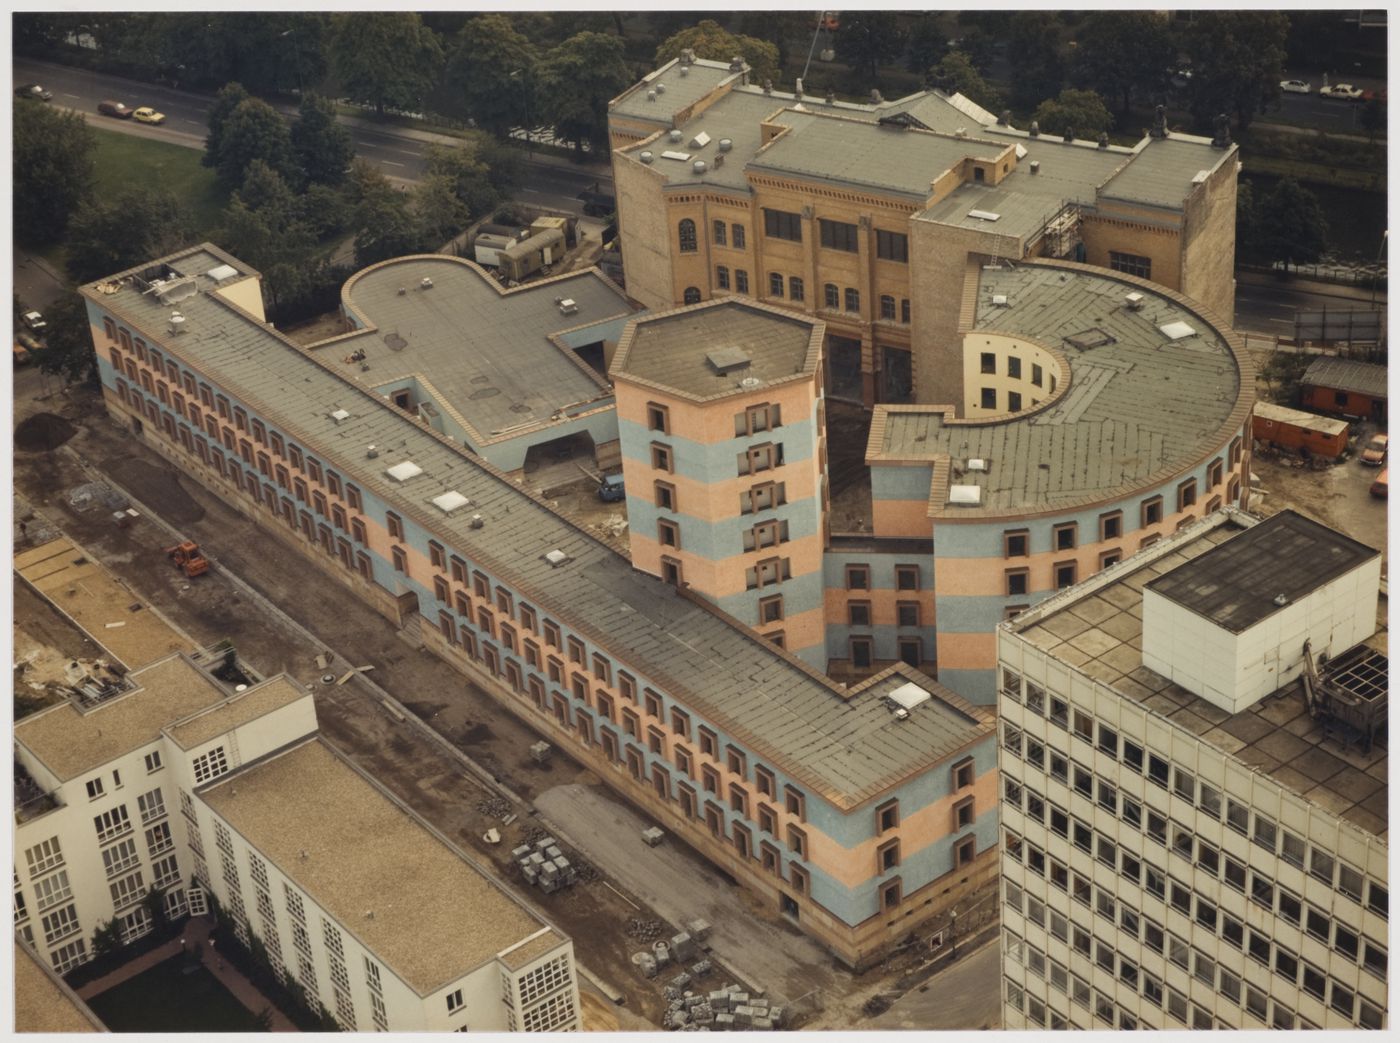 Wissenschaftszentrum, Berlin, Germany: aerial view